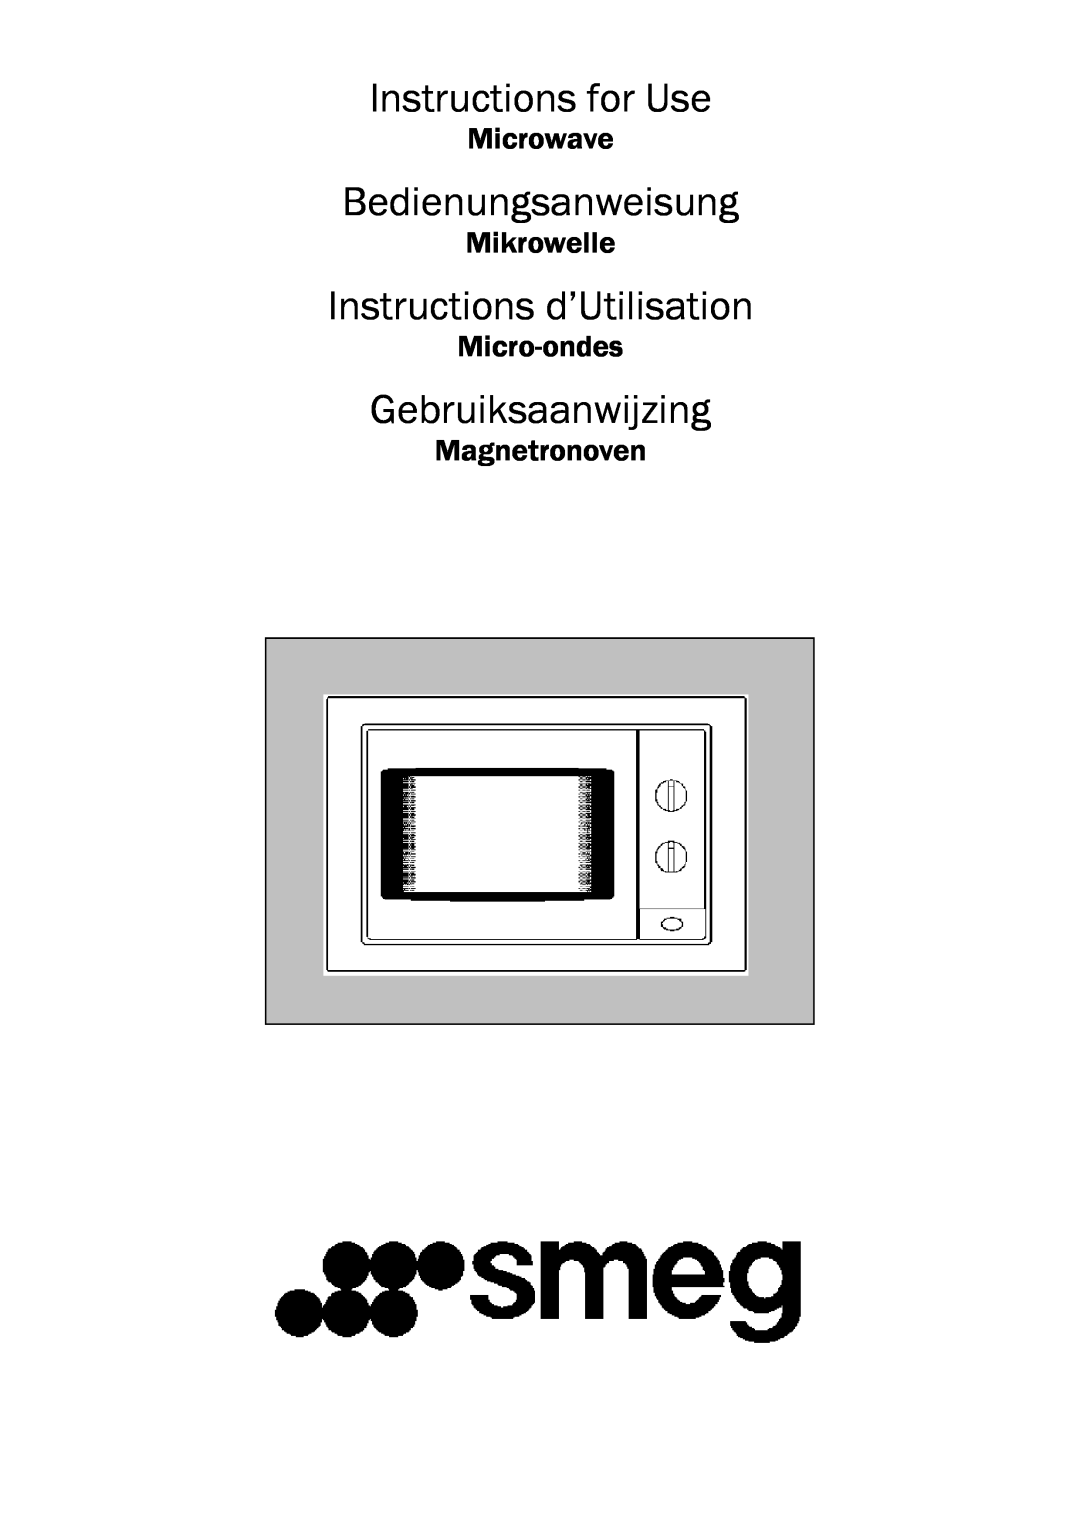 Smeg FME18EX manual Instructions for Use, Bedienungsanweisung, Instructions d’Utilisation, Gebruiksaanwijzing, Microwave 